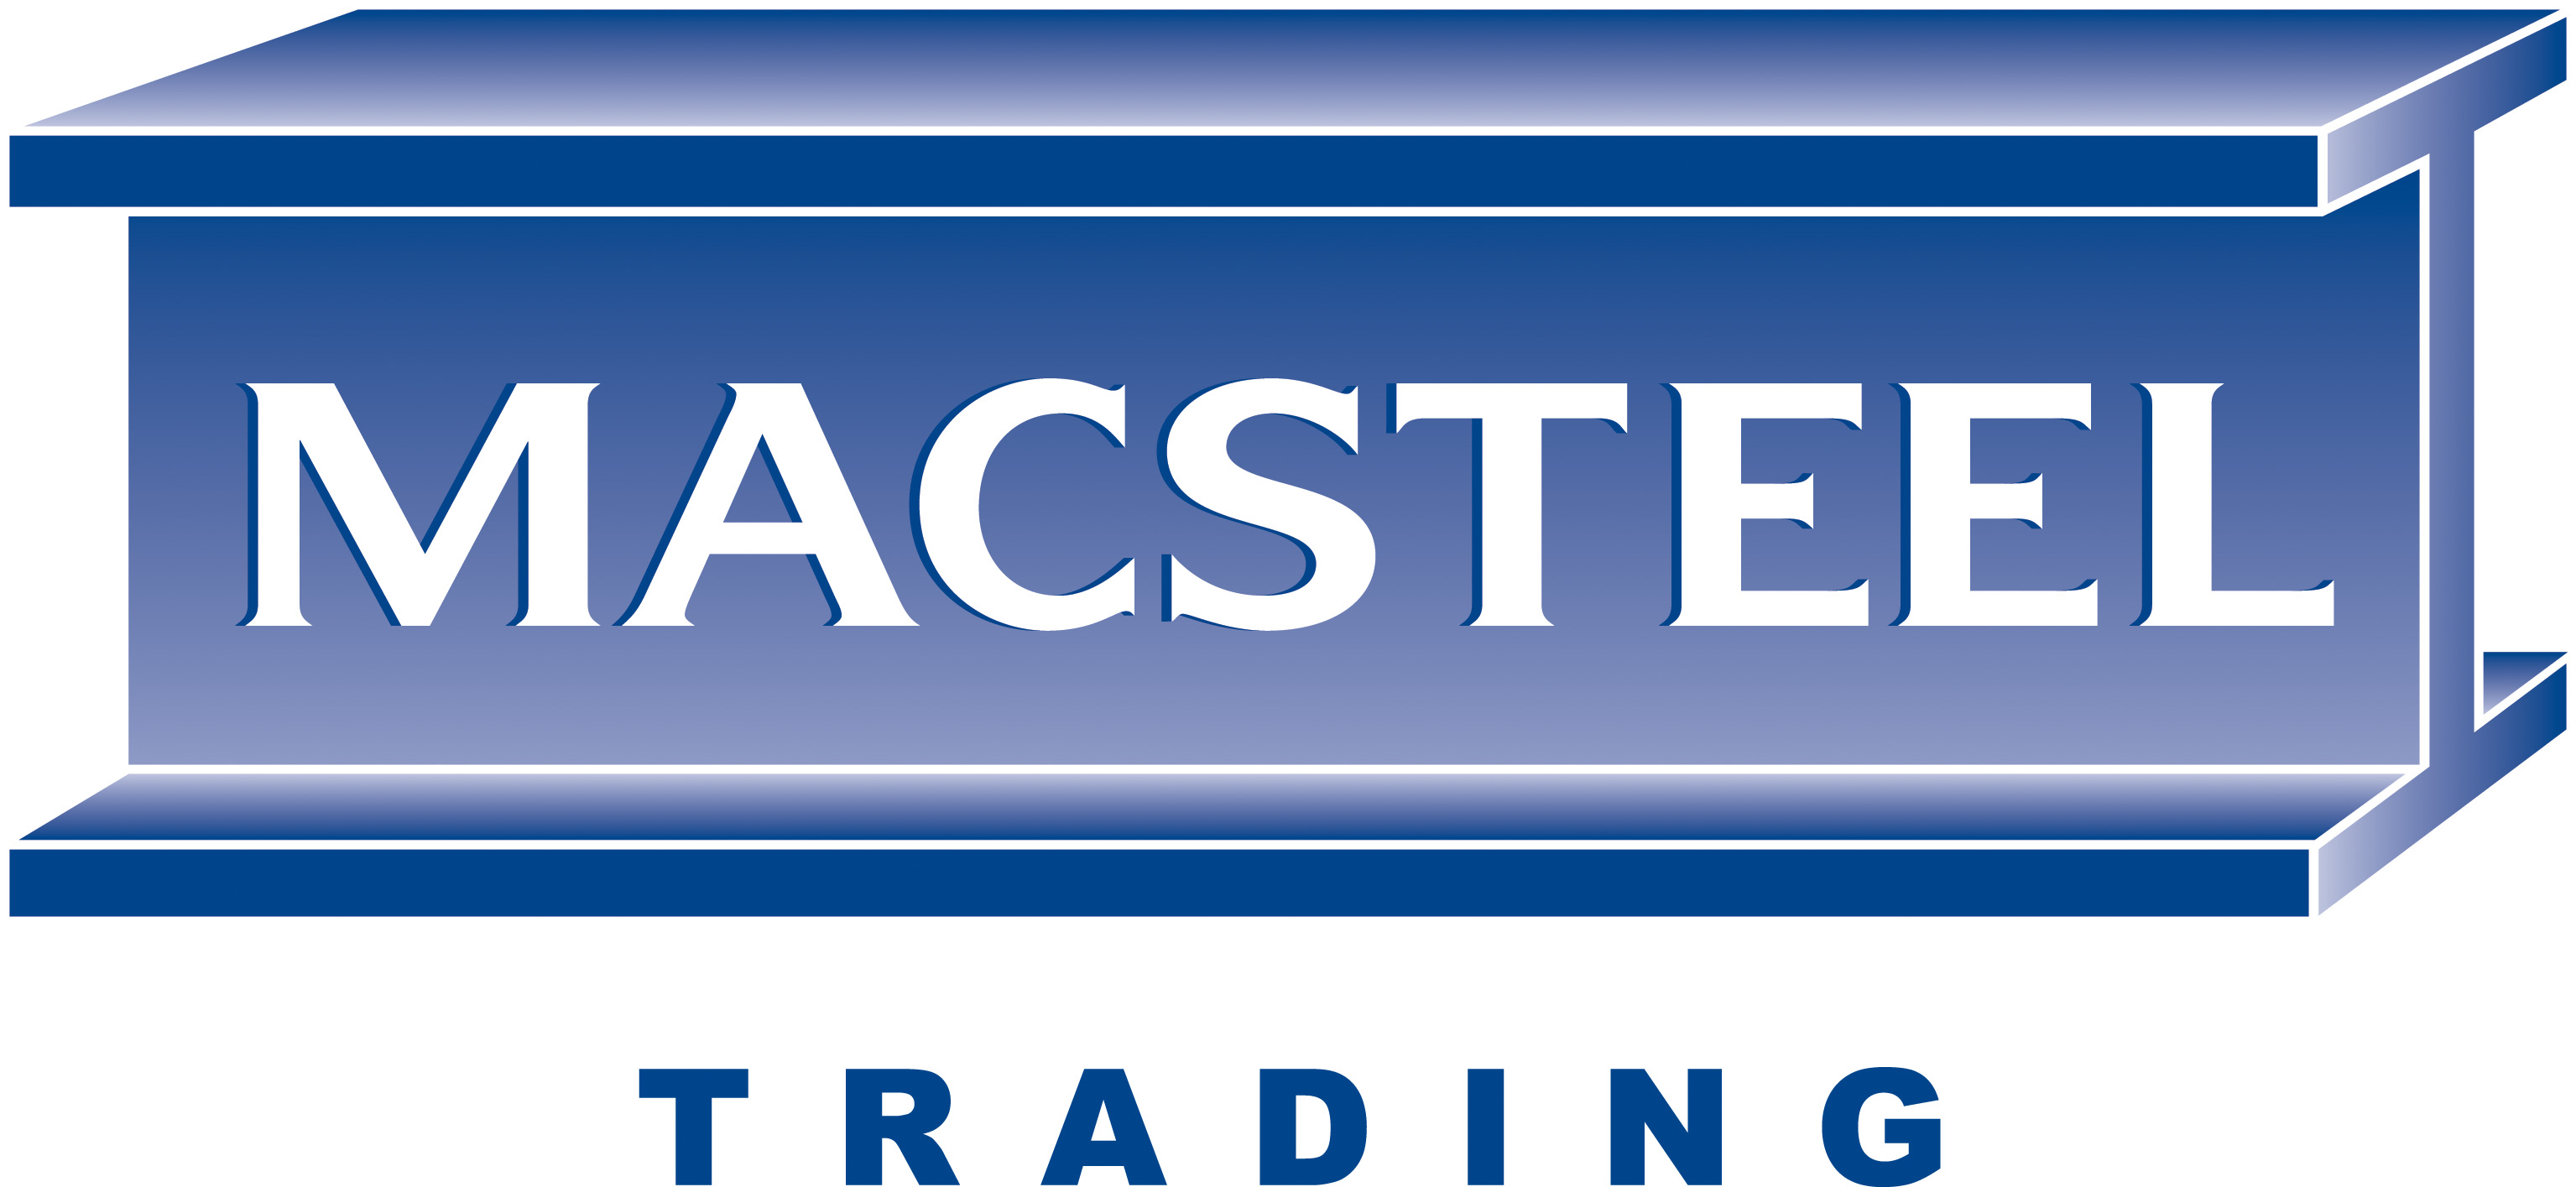 Macsteel Trading- Port Elizabeth logo